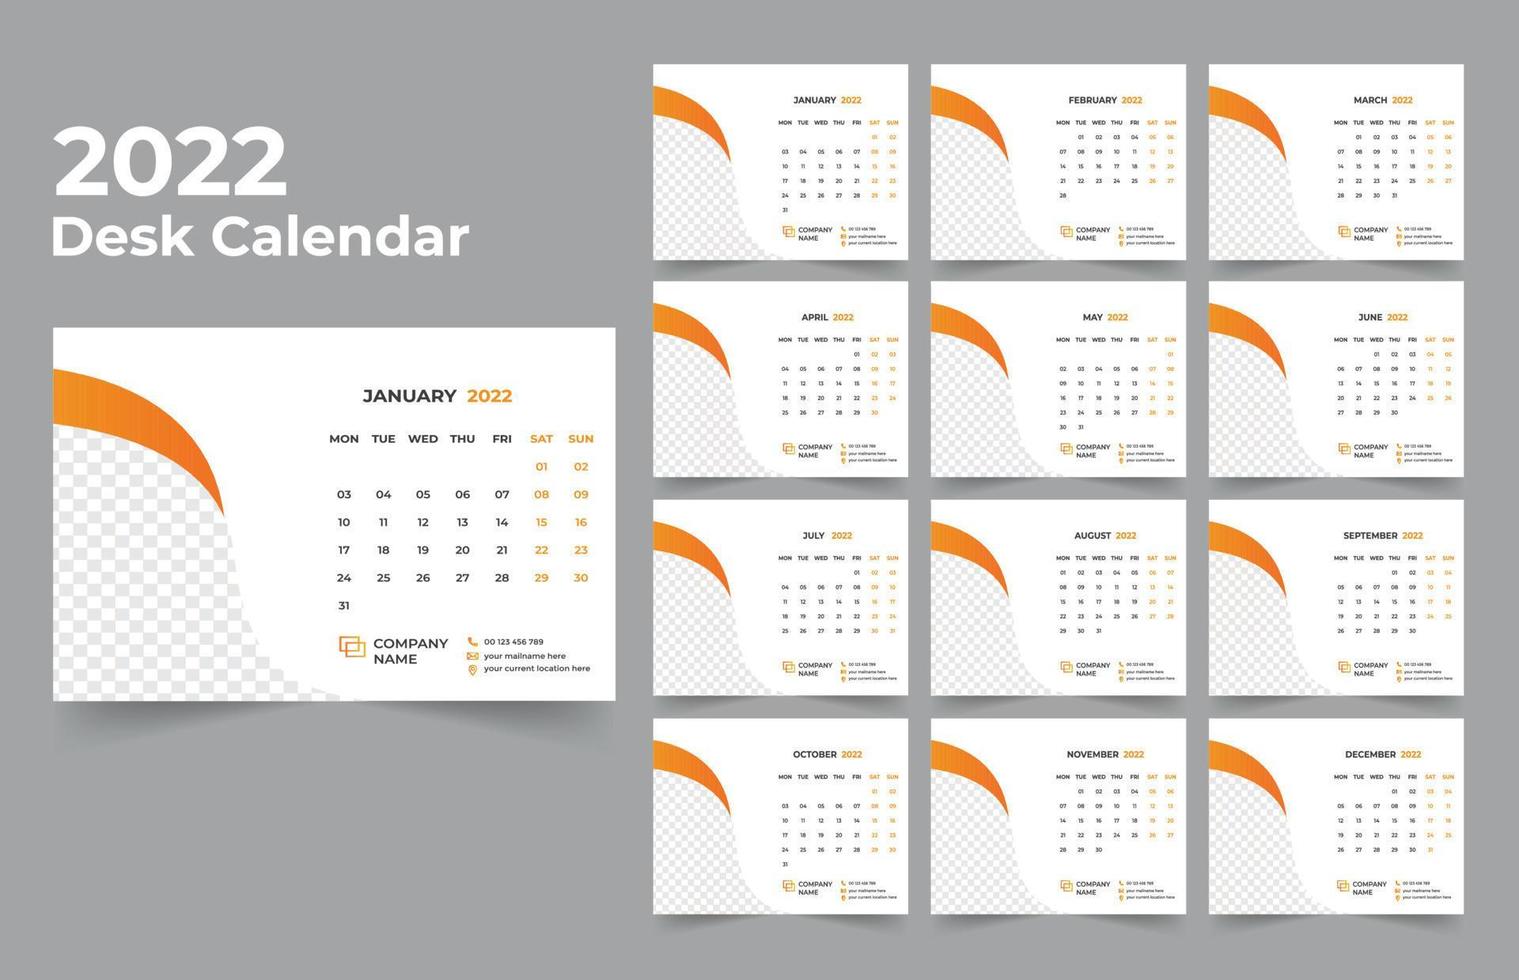 Desk calendar design 2022 template Set of 12 Months, Week starts Monday, Stationery design, calendar planner vector